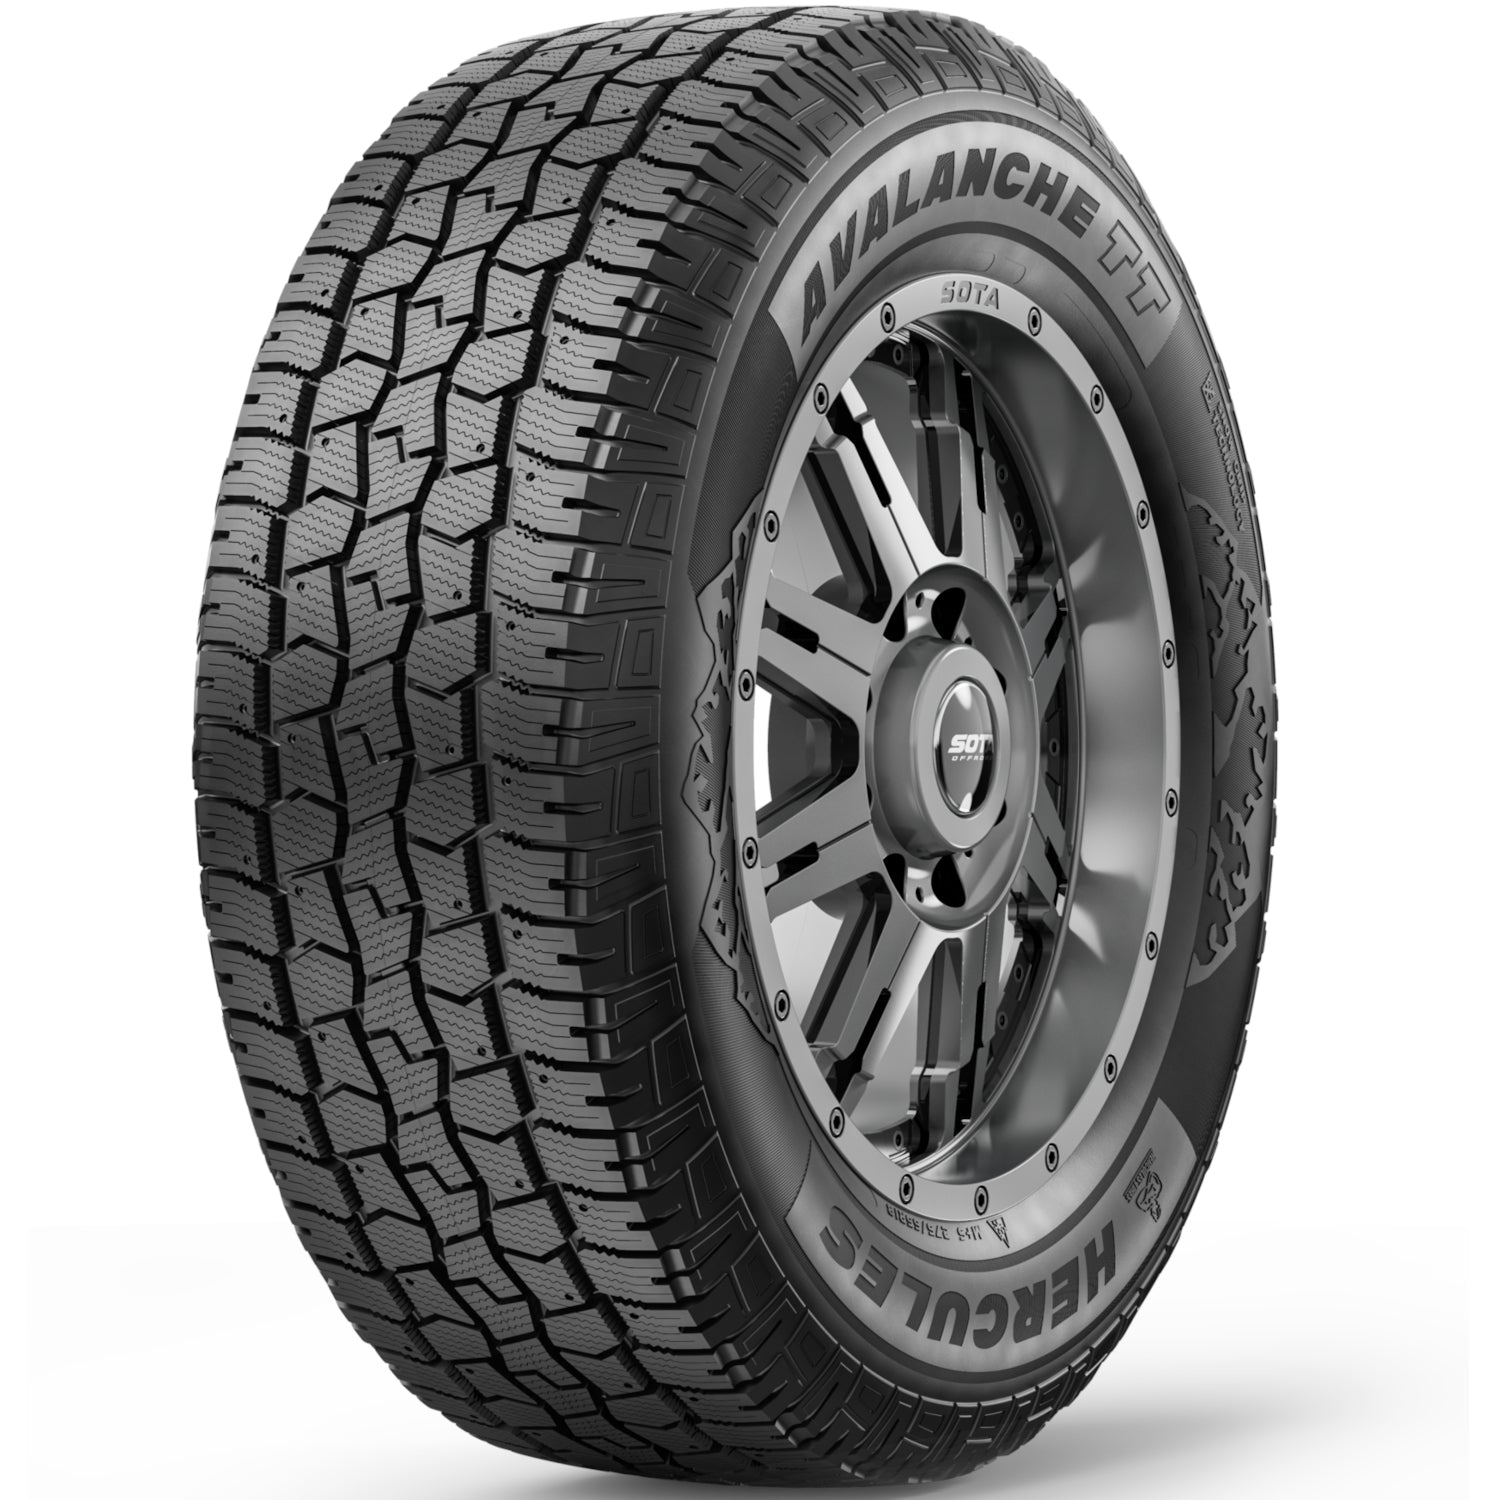 HERCULES AVALANCHE TT LT245/75R17 (31.8X9.7R 17) Tires